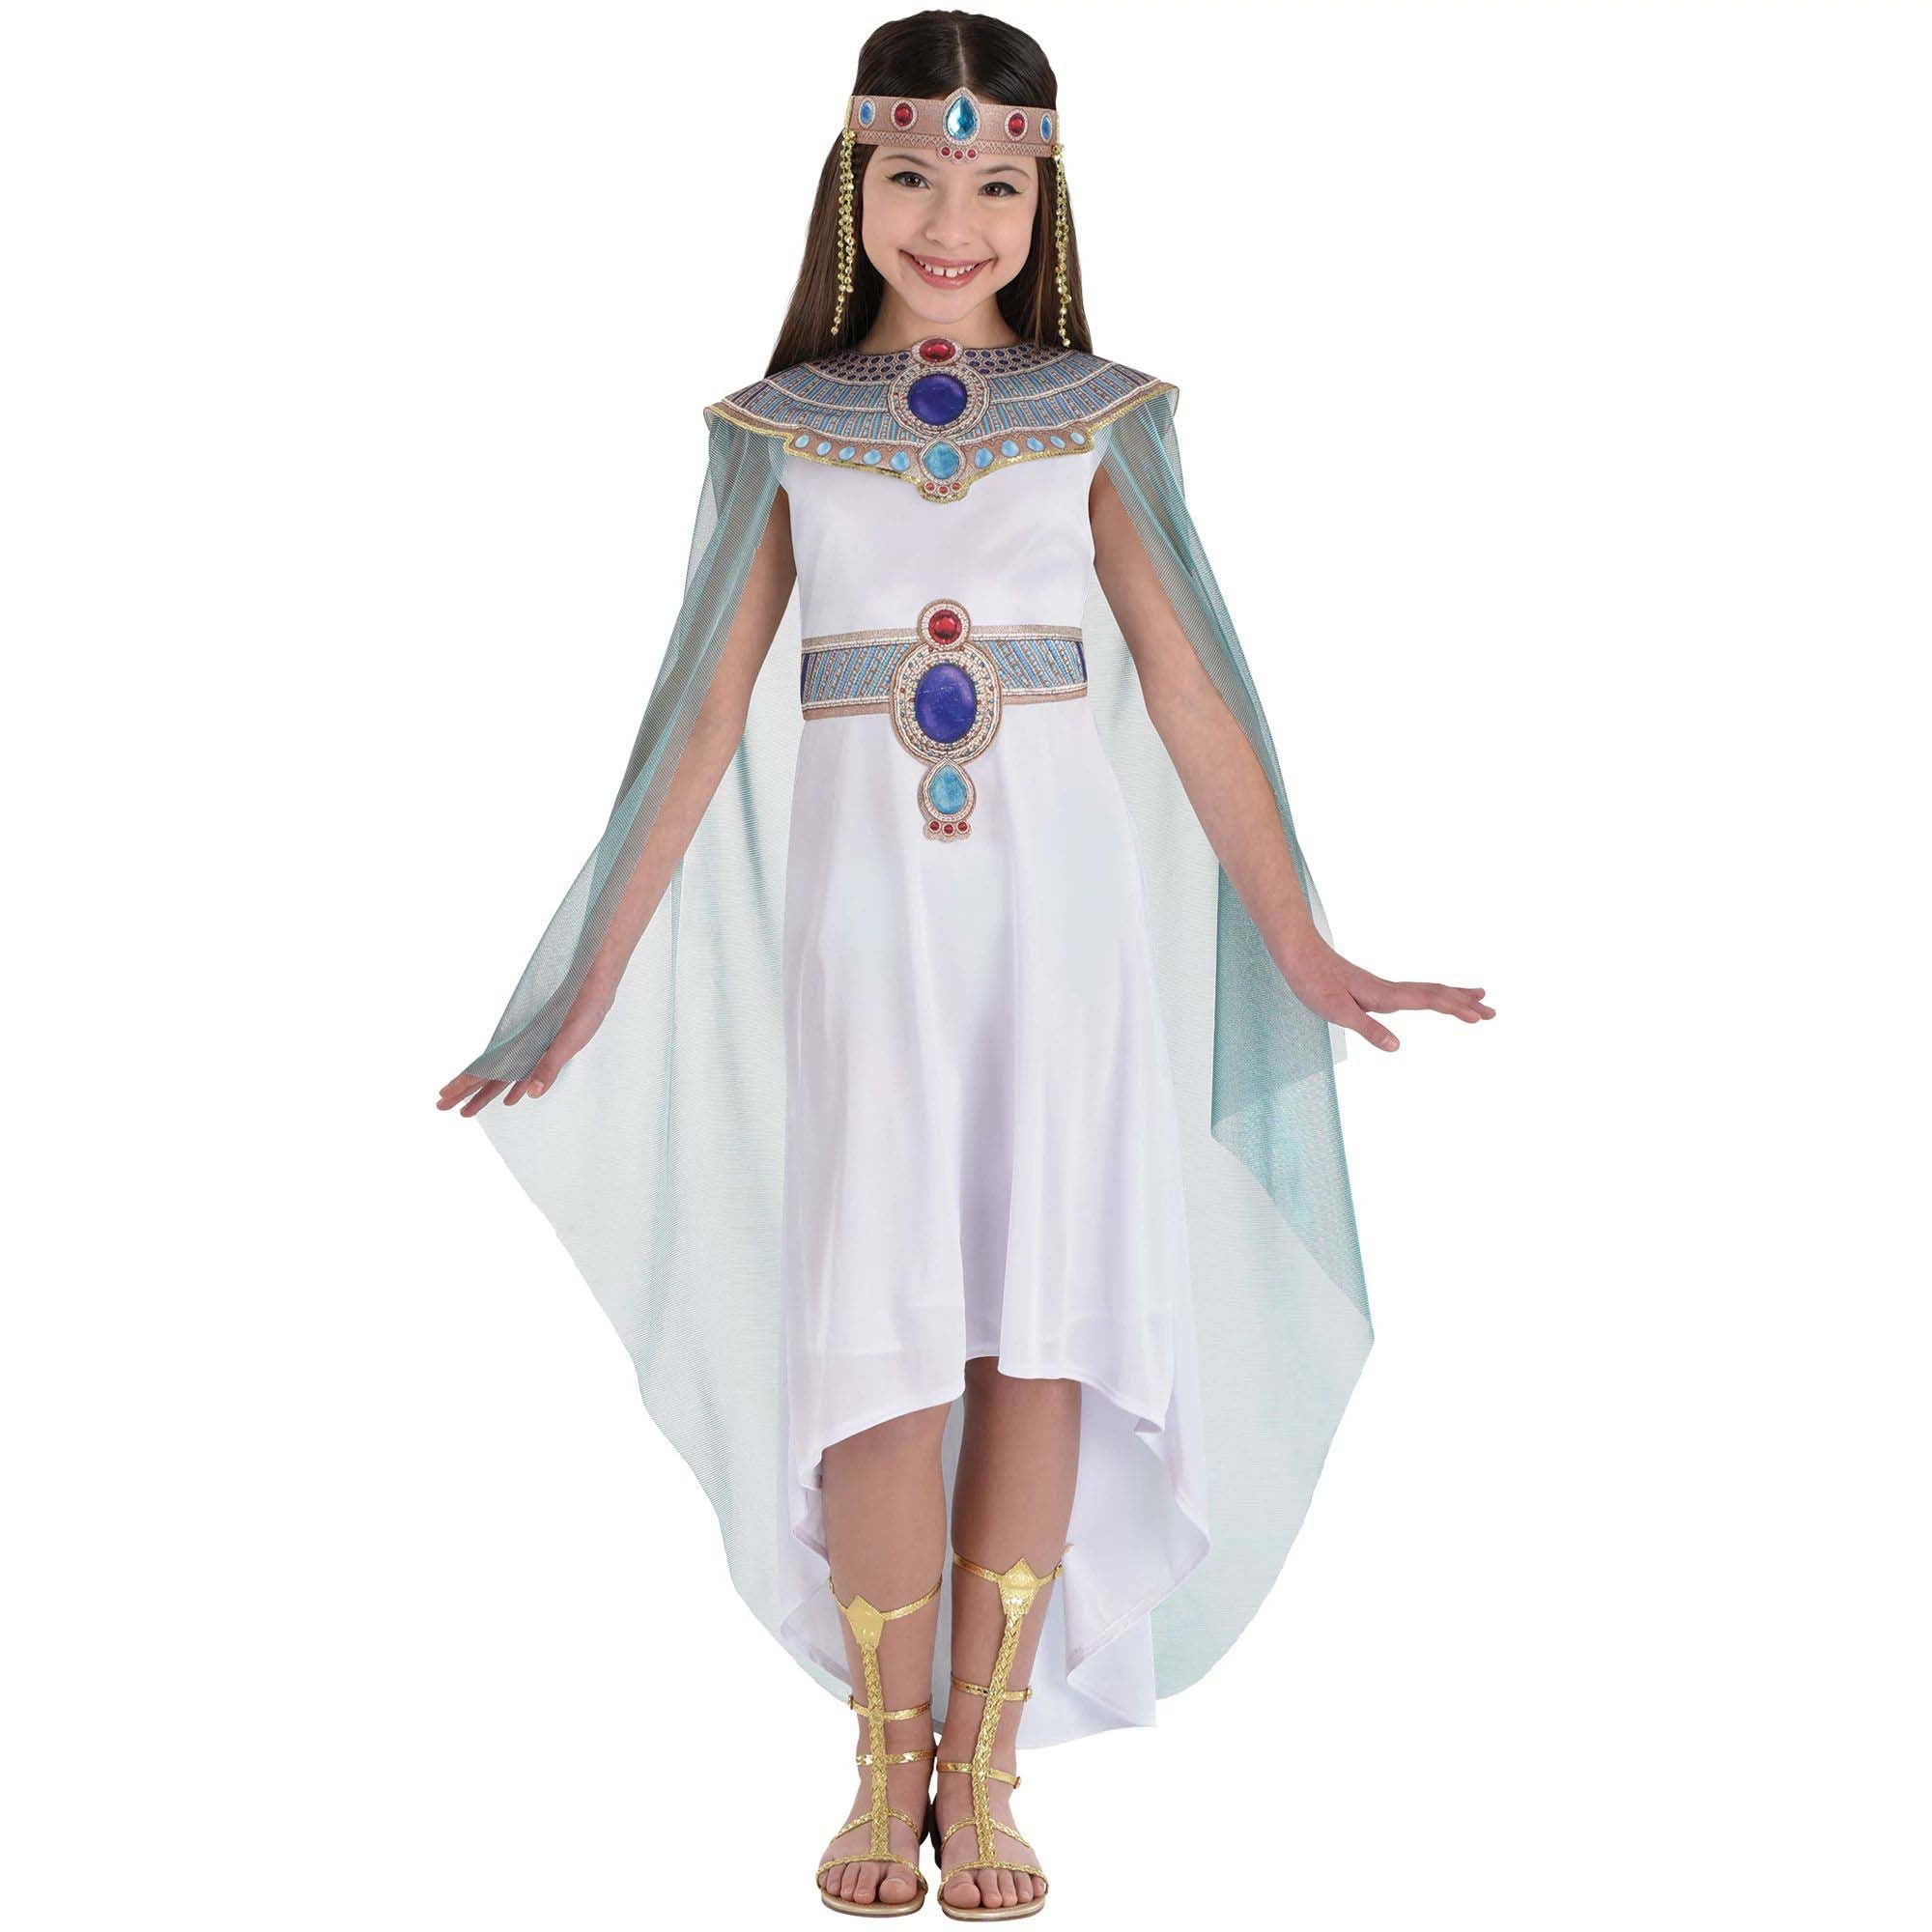 Queen Cleopatra Costume for Kids